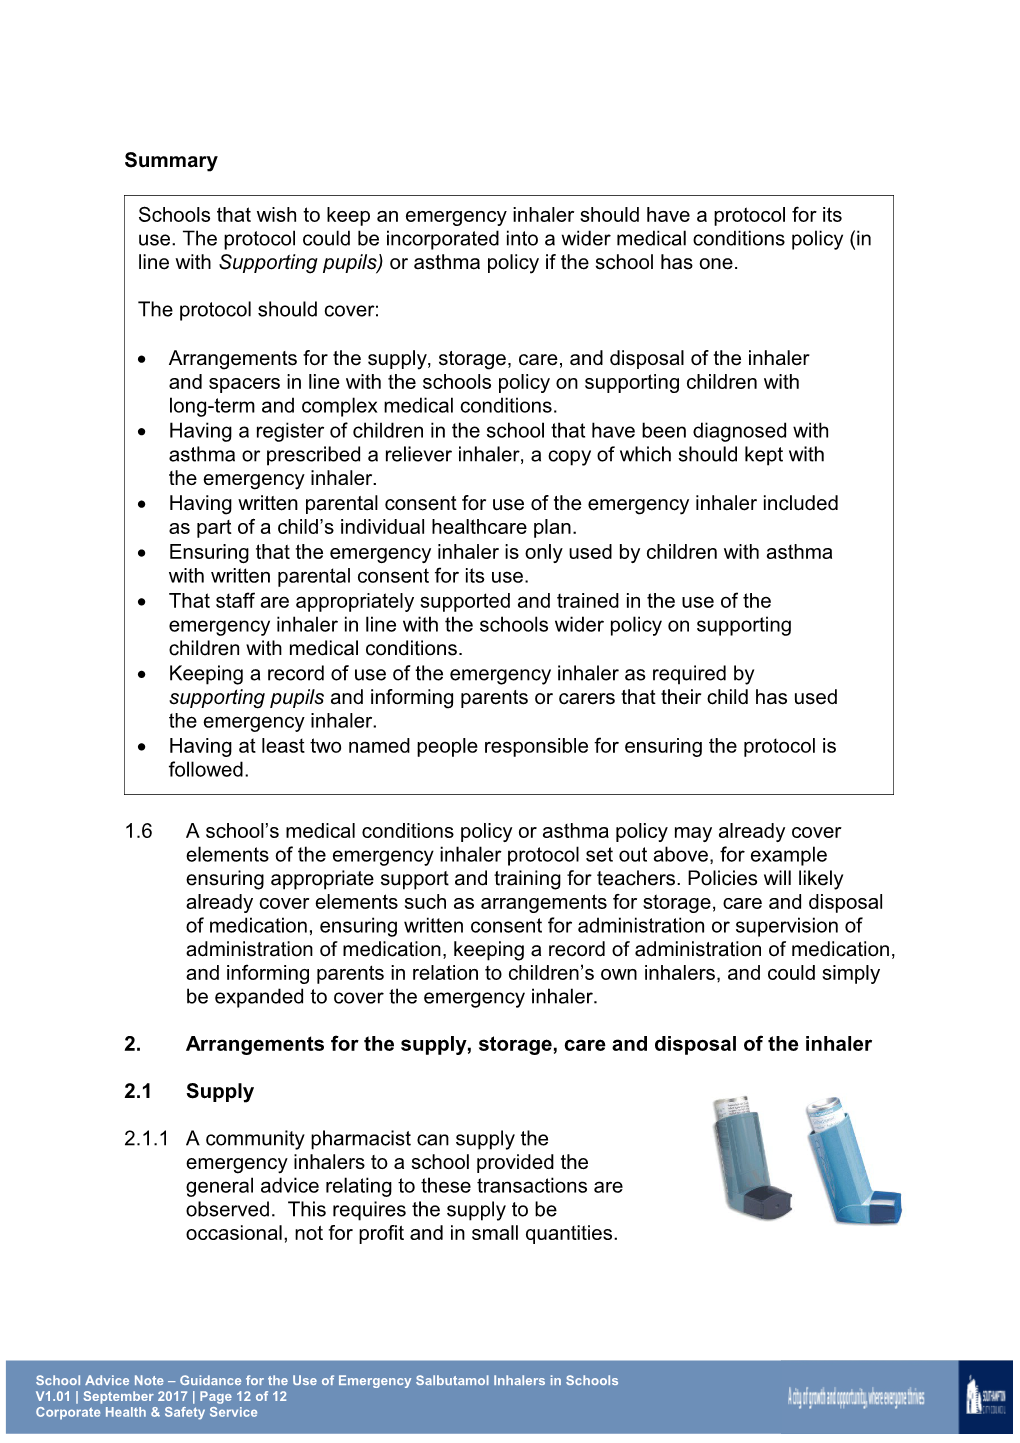 Guidance for the Use of Emergency Salbutamol Inhalers in Schools